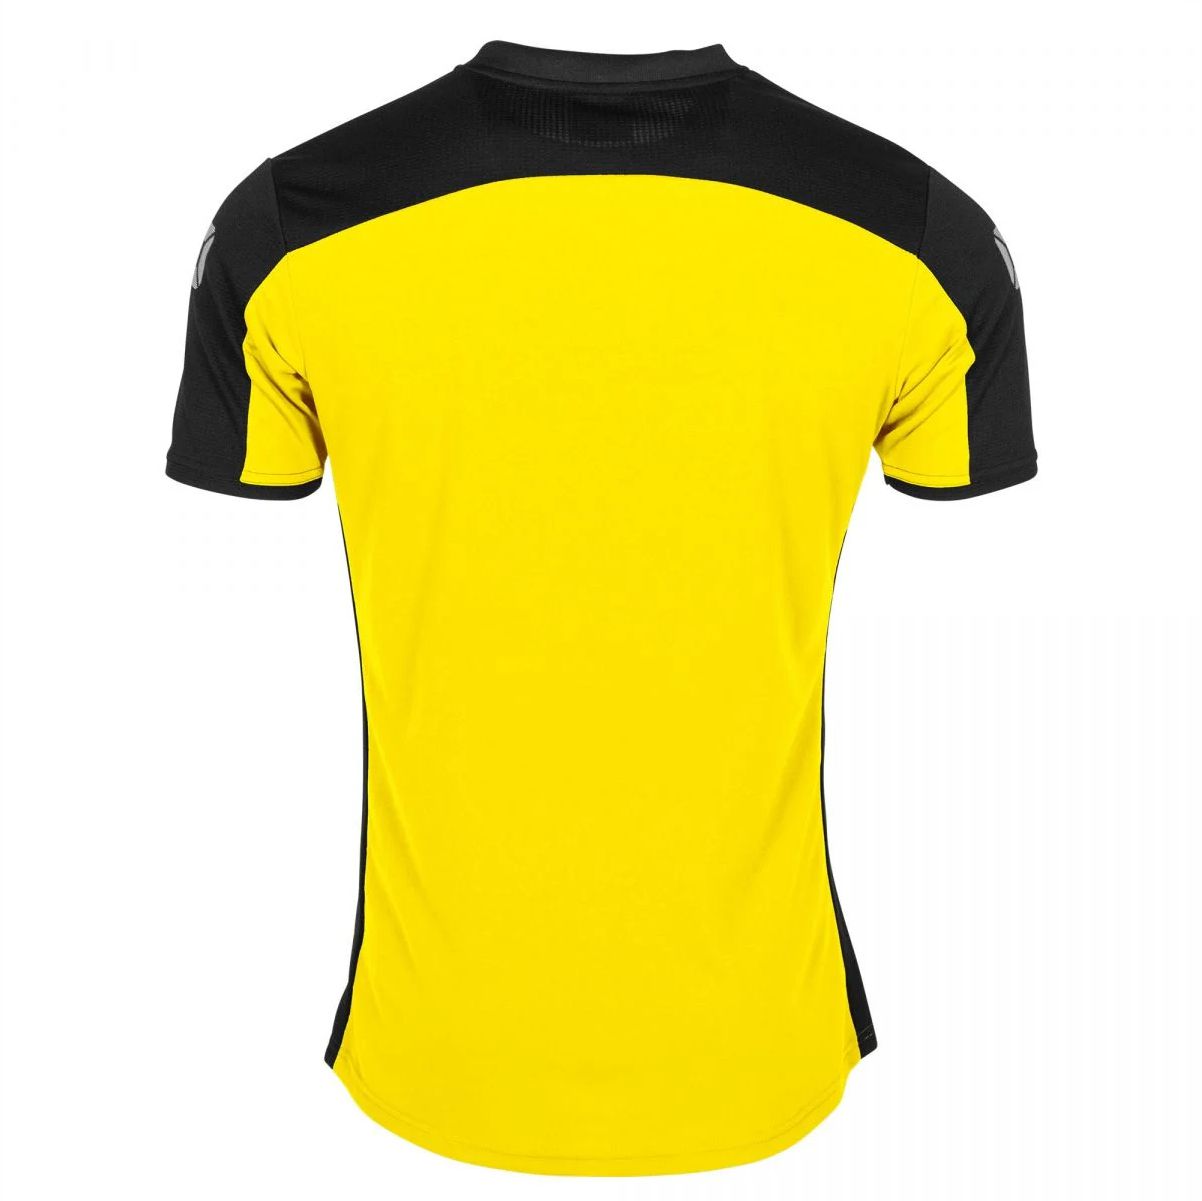 Stanno - Pride Shirt - Yellow & Black